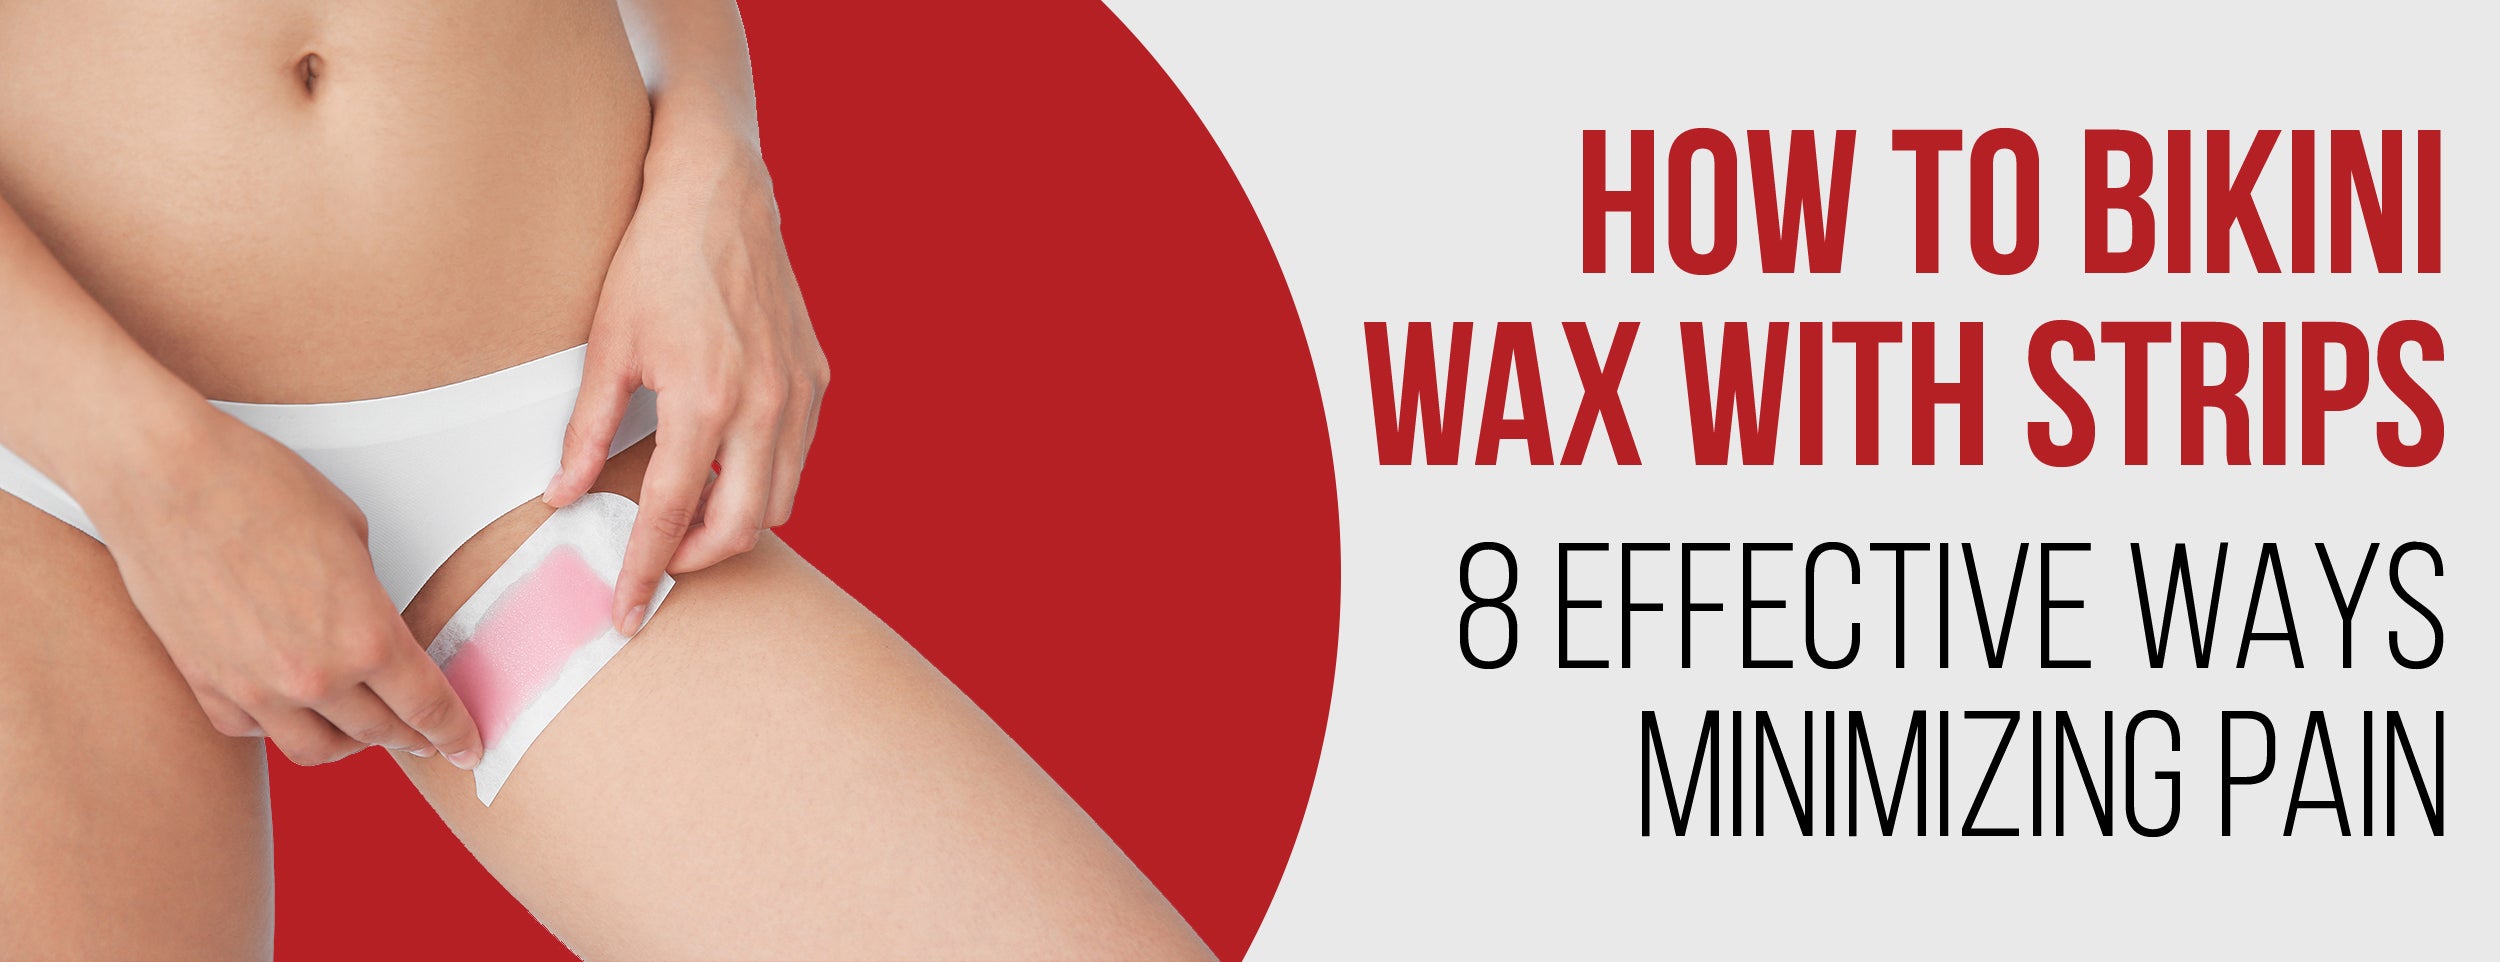 8 Effective Ways to Bikini Wax with Strips [5 Tips to Minimize Pain]